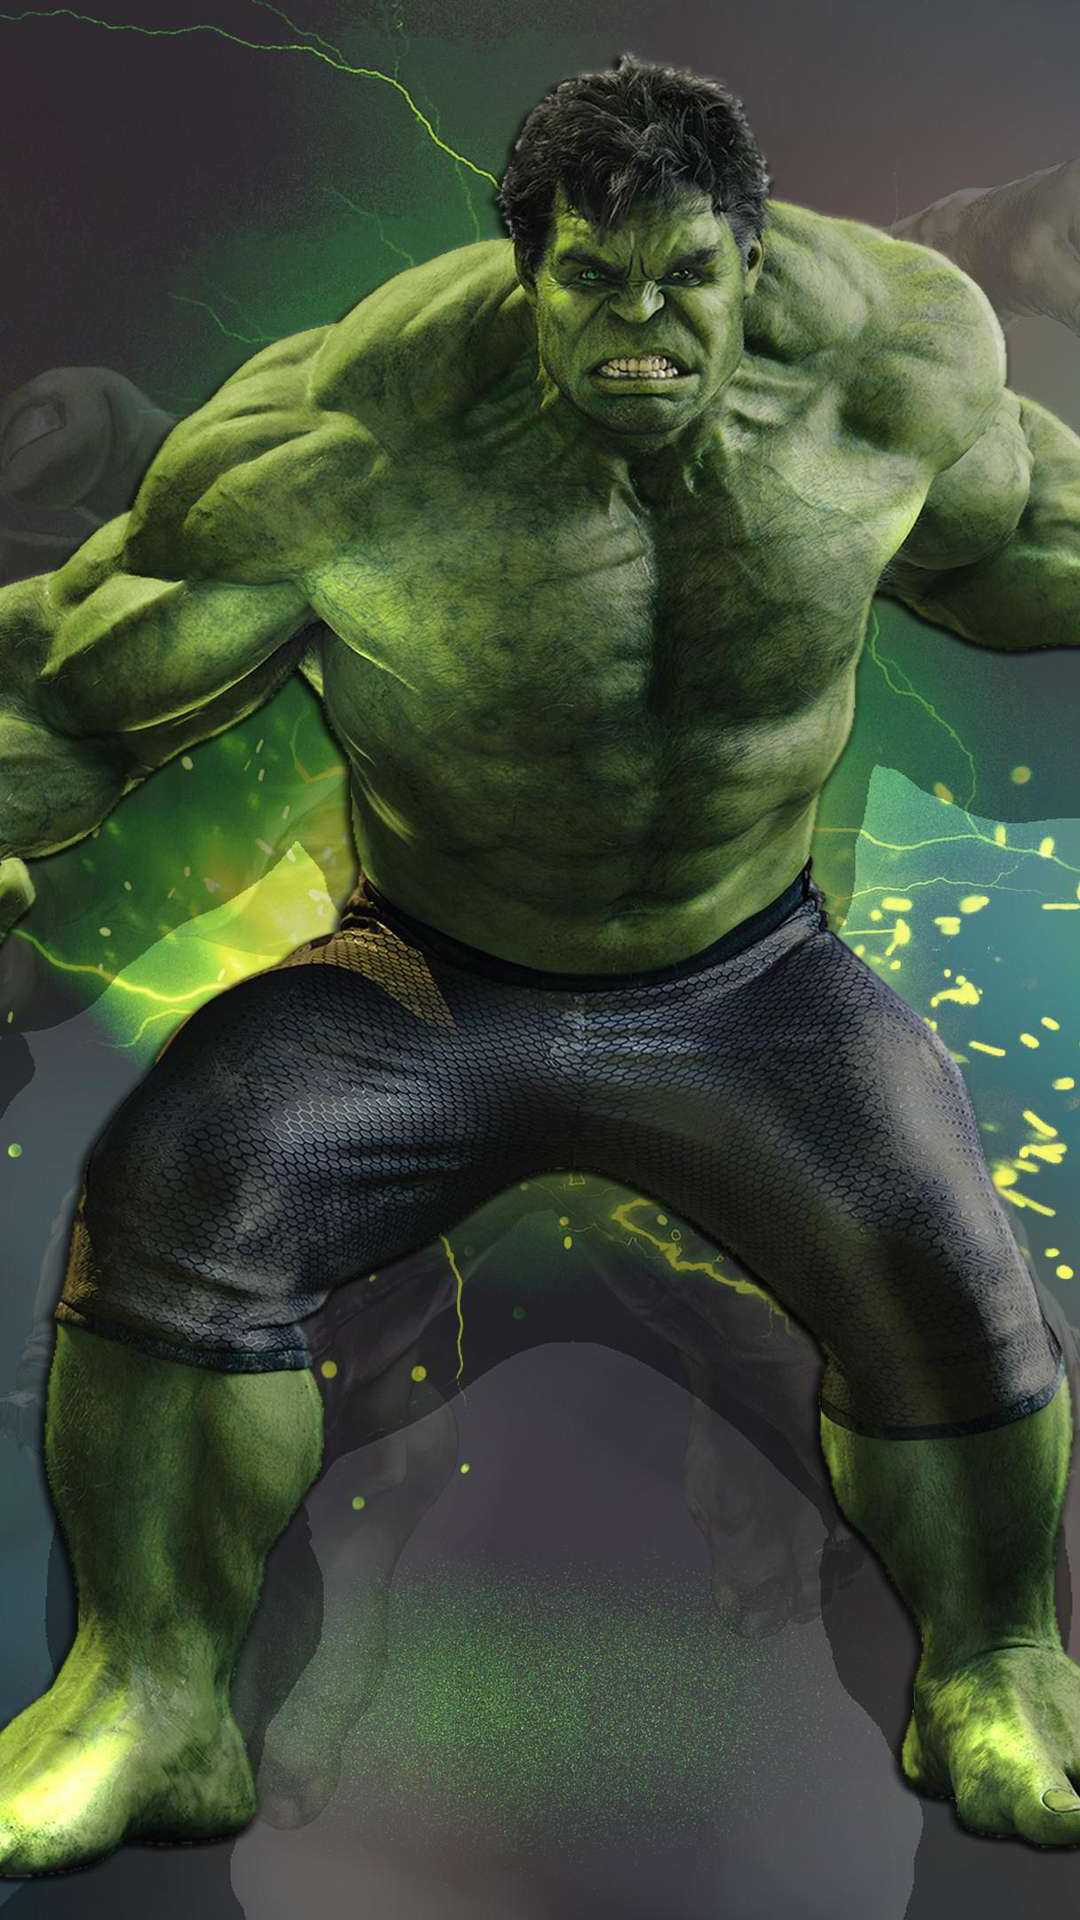 Hulk Smash Dynamic Mobile Wallpaper by Laxmonaut - Mobile Abyss-thanhphatduhoc.com.vn